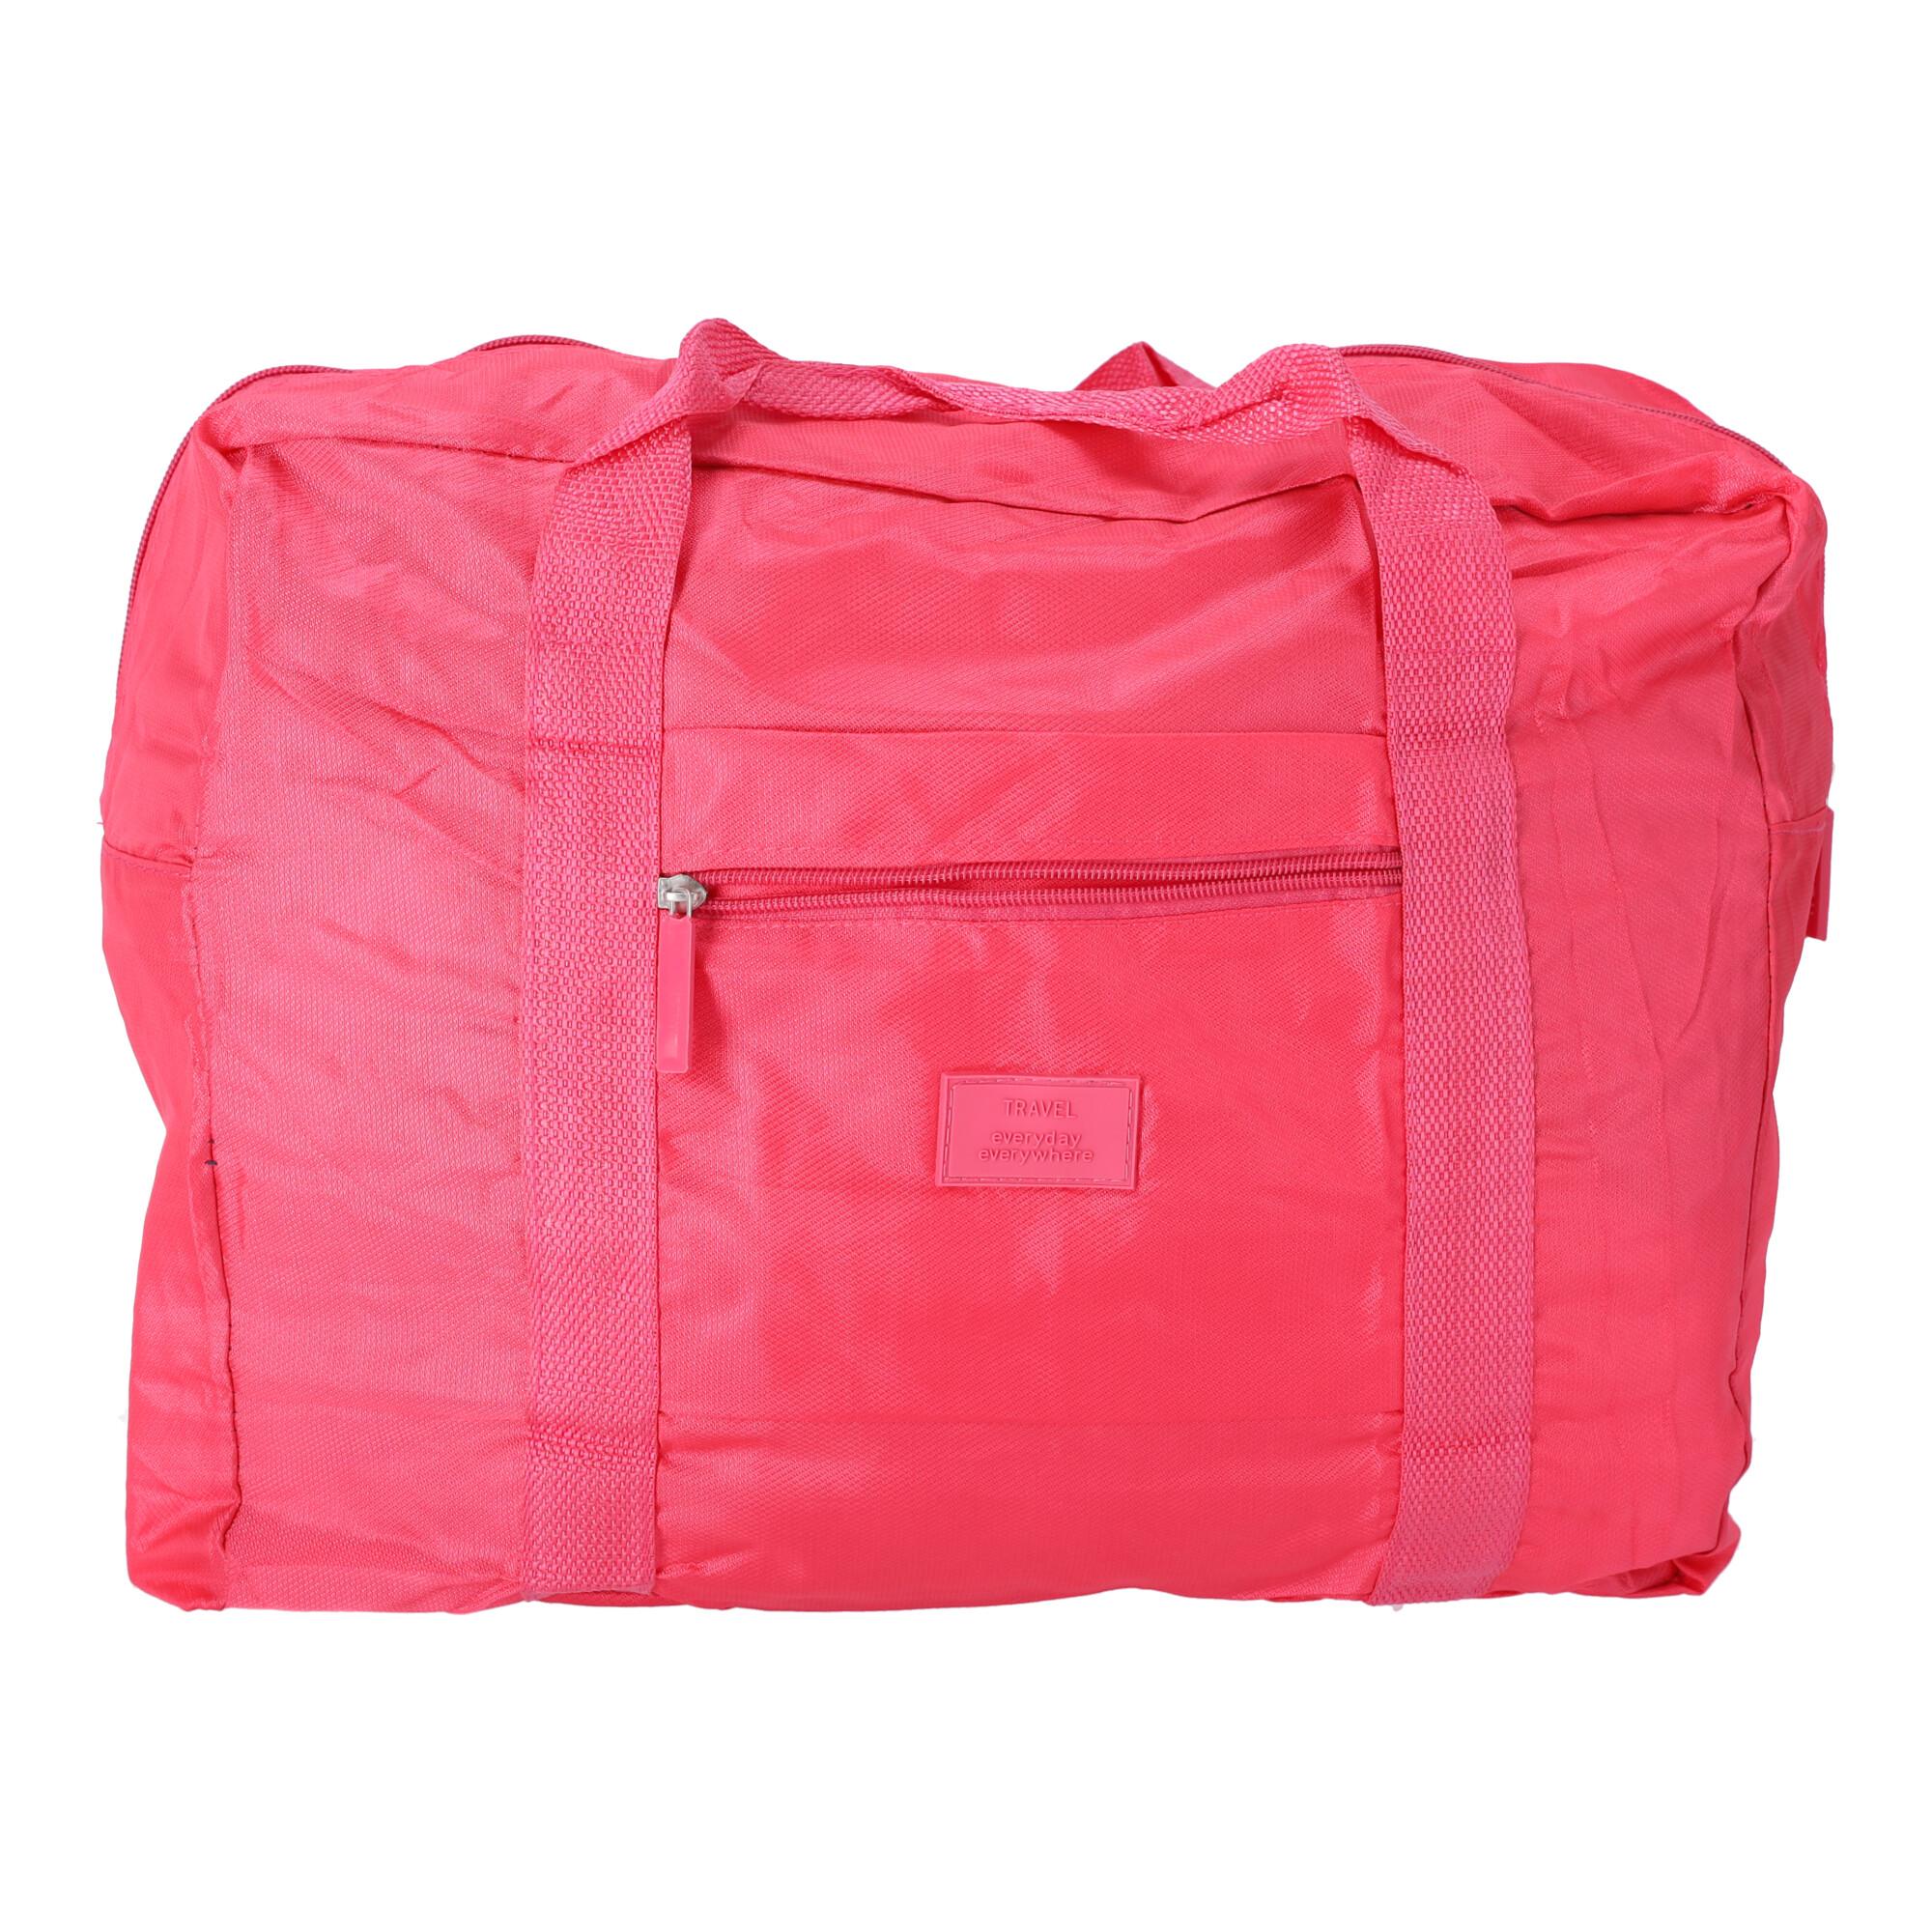 Classic travel, sports bag - dark pink